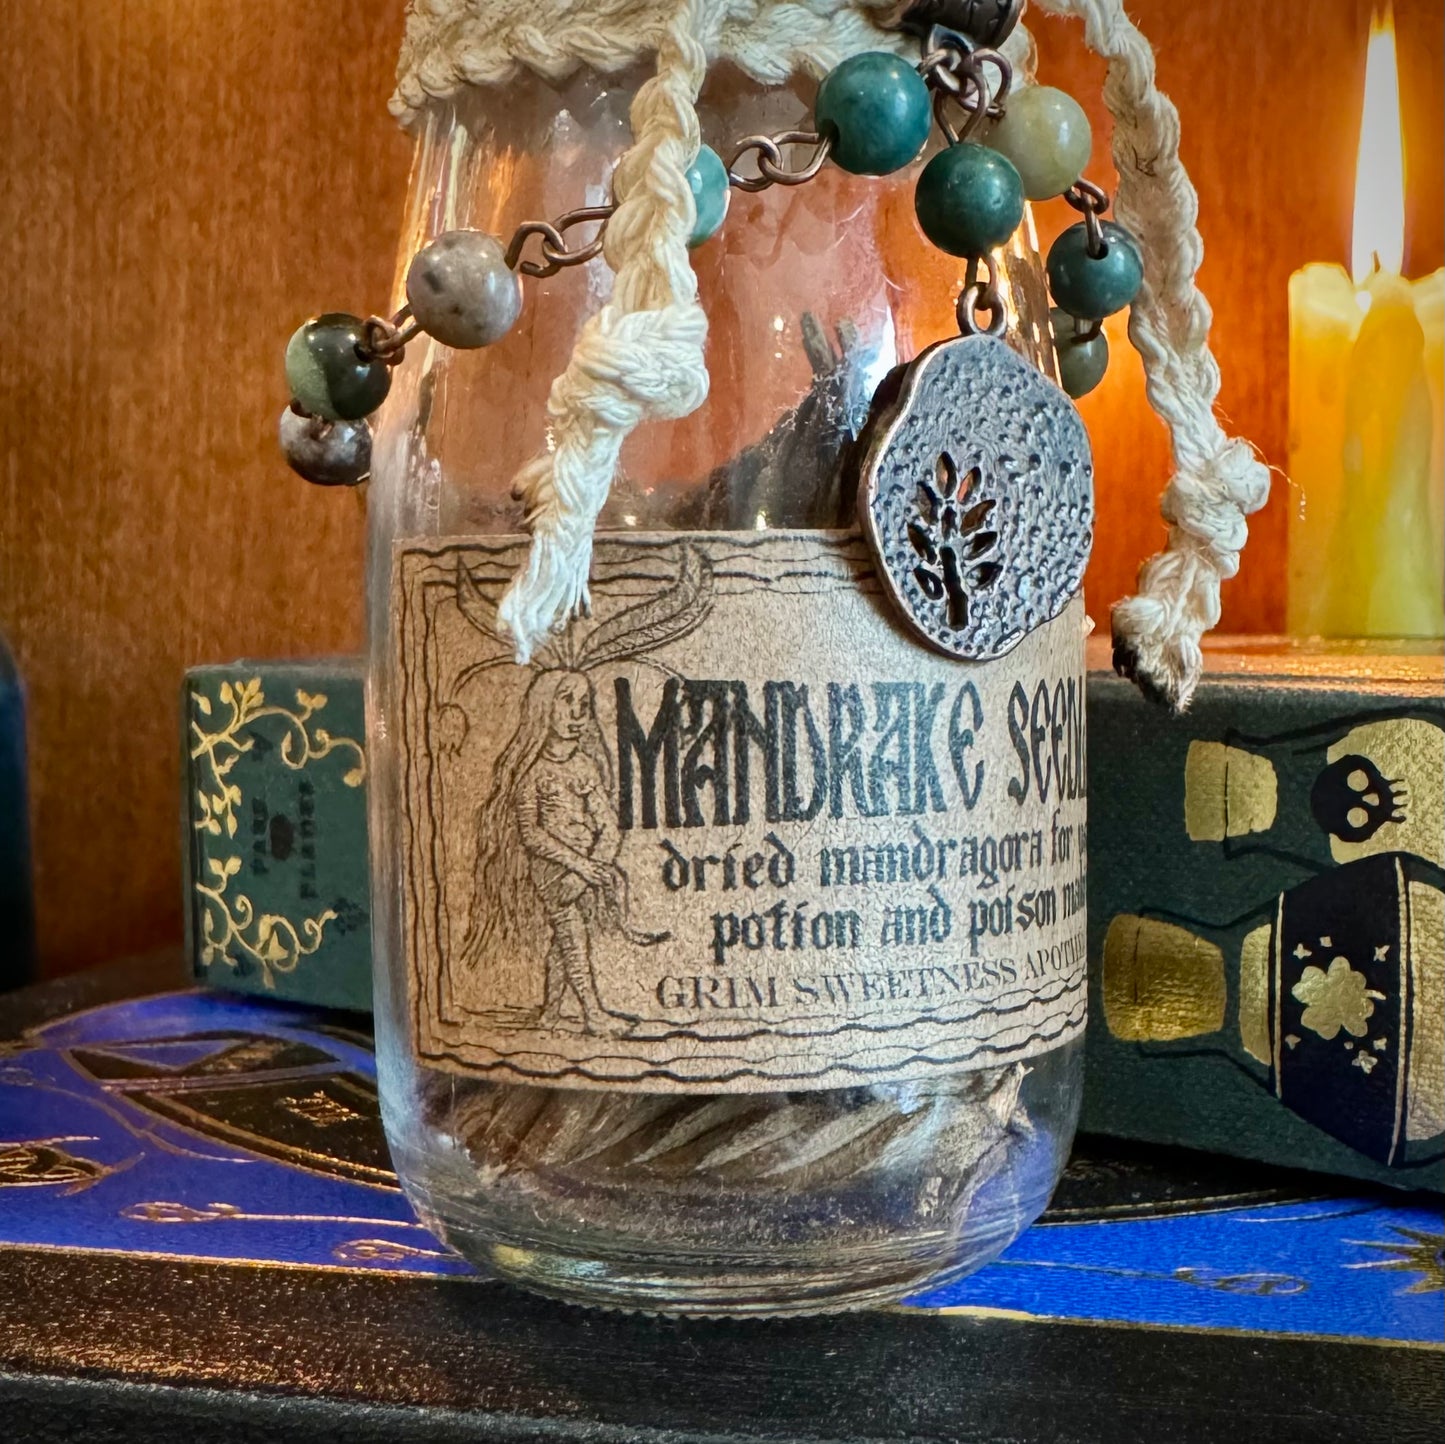 Dried Mandrake Seedlings, A Decorative Apothecary Jar